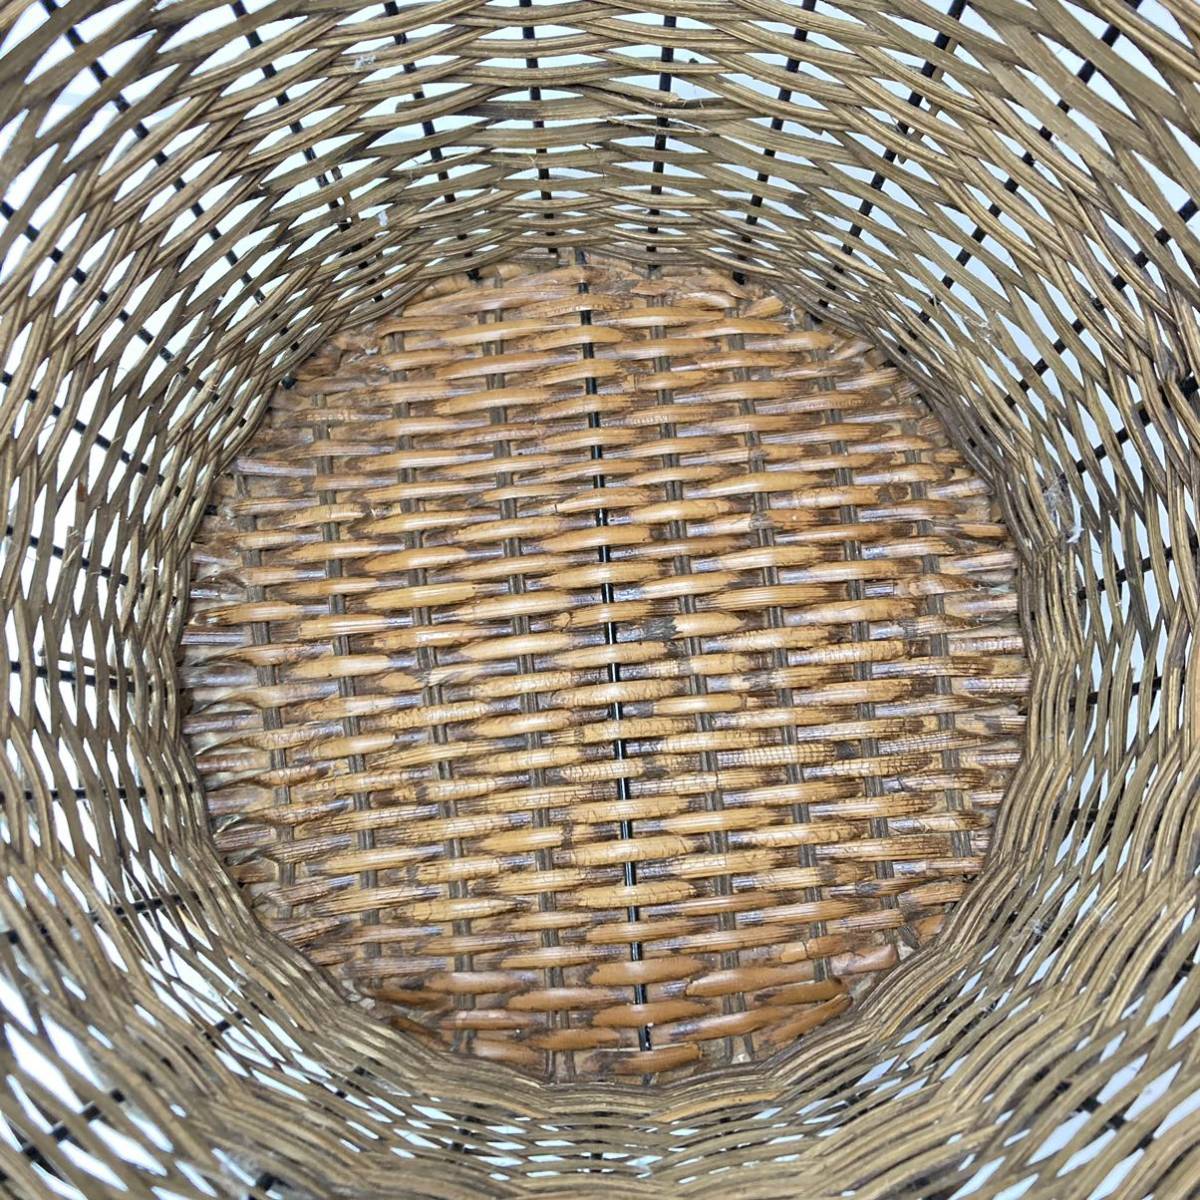  dumpster iron basket . waste basket interior inserting thing storage 